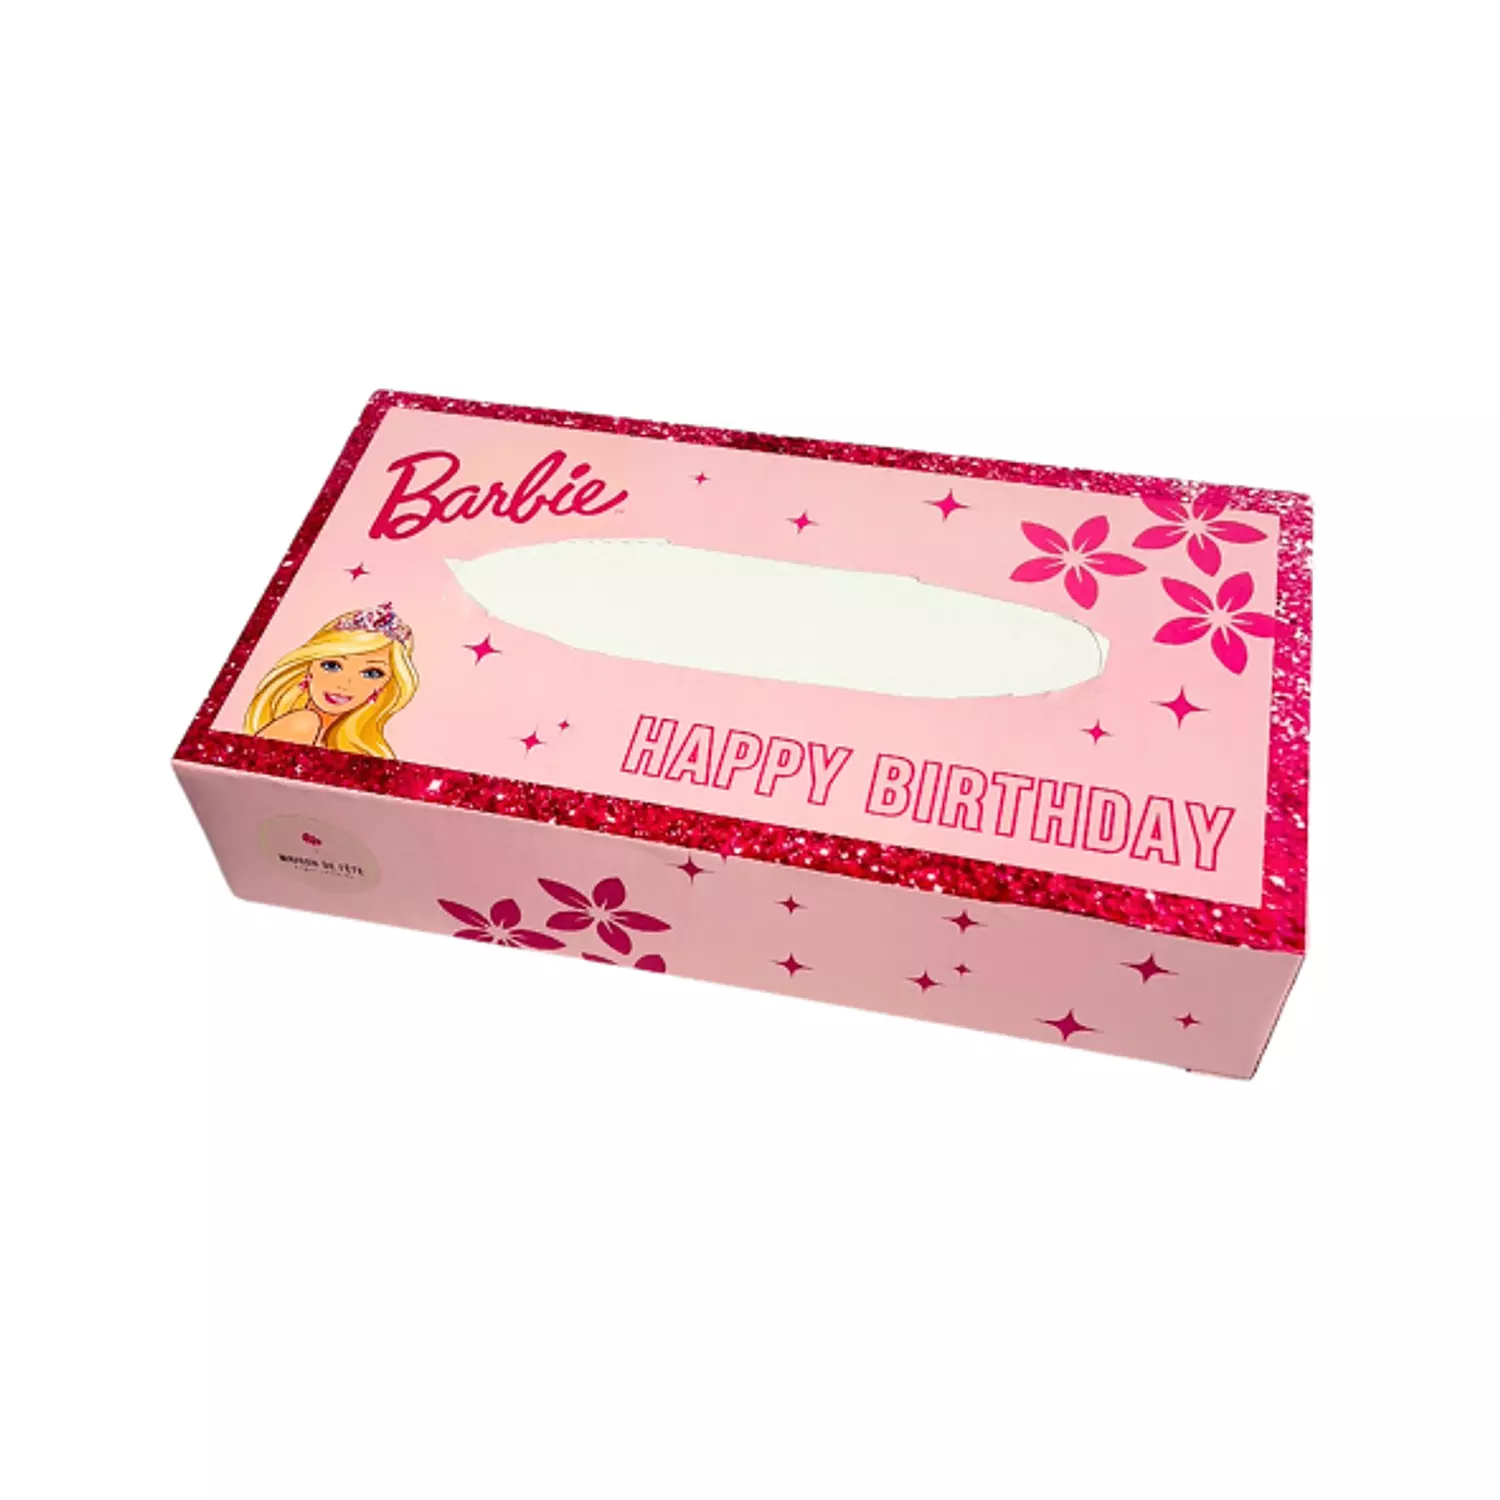 Barbie Tissue Box hover image